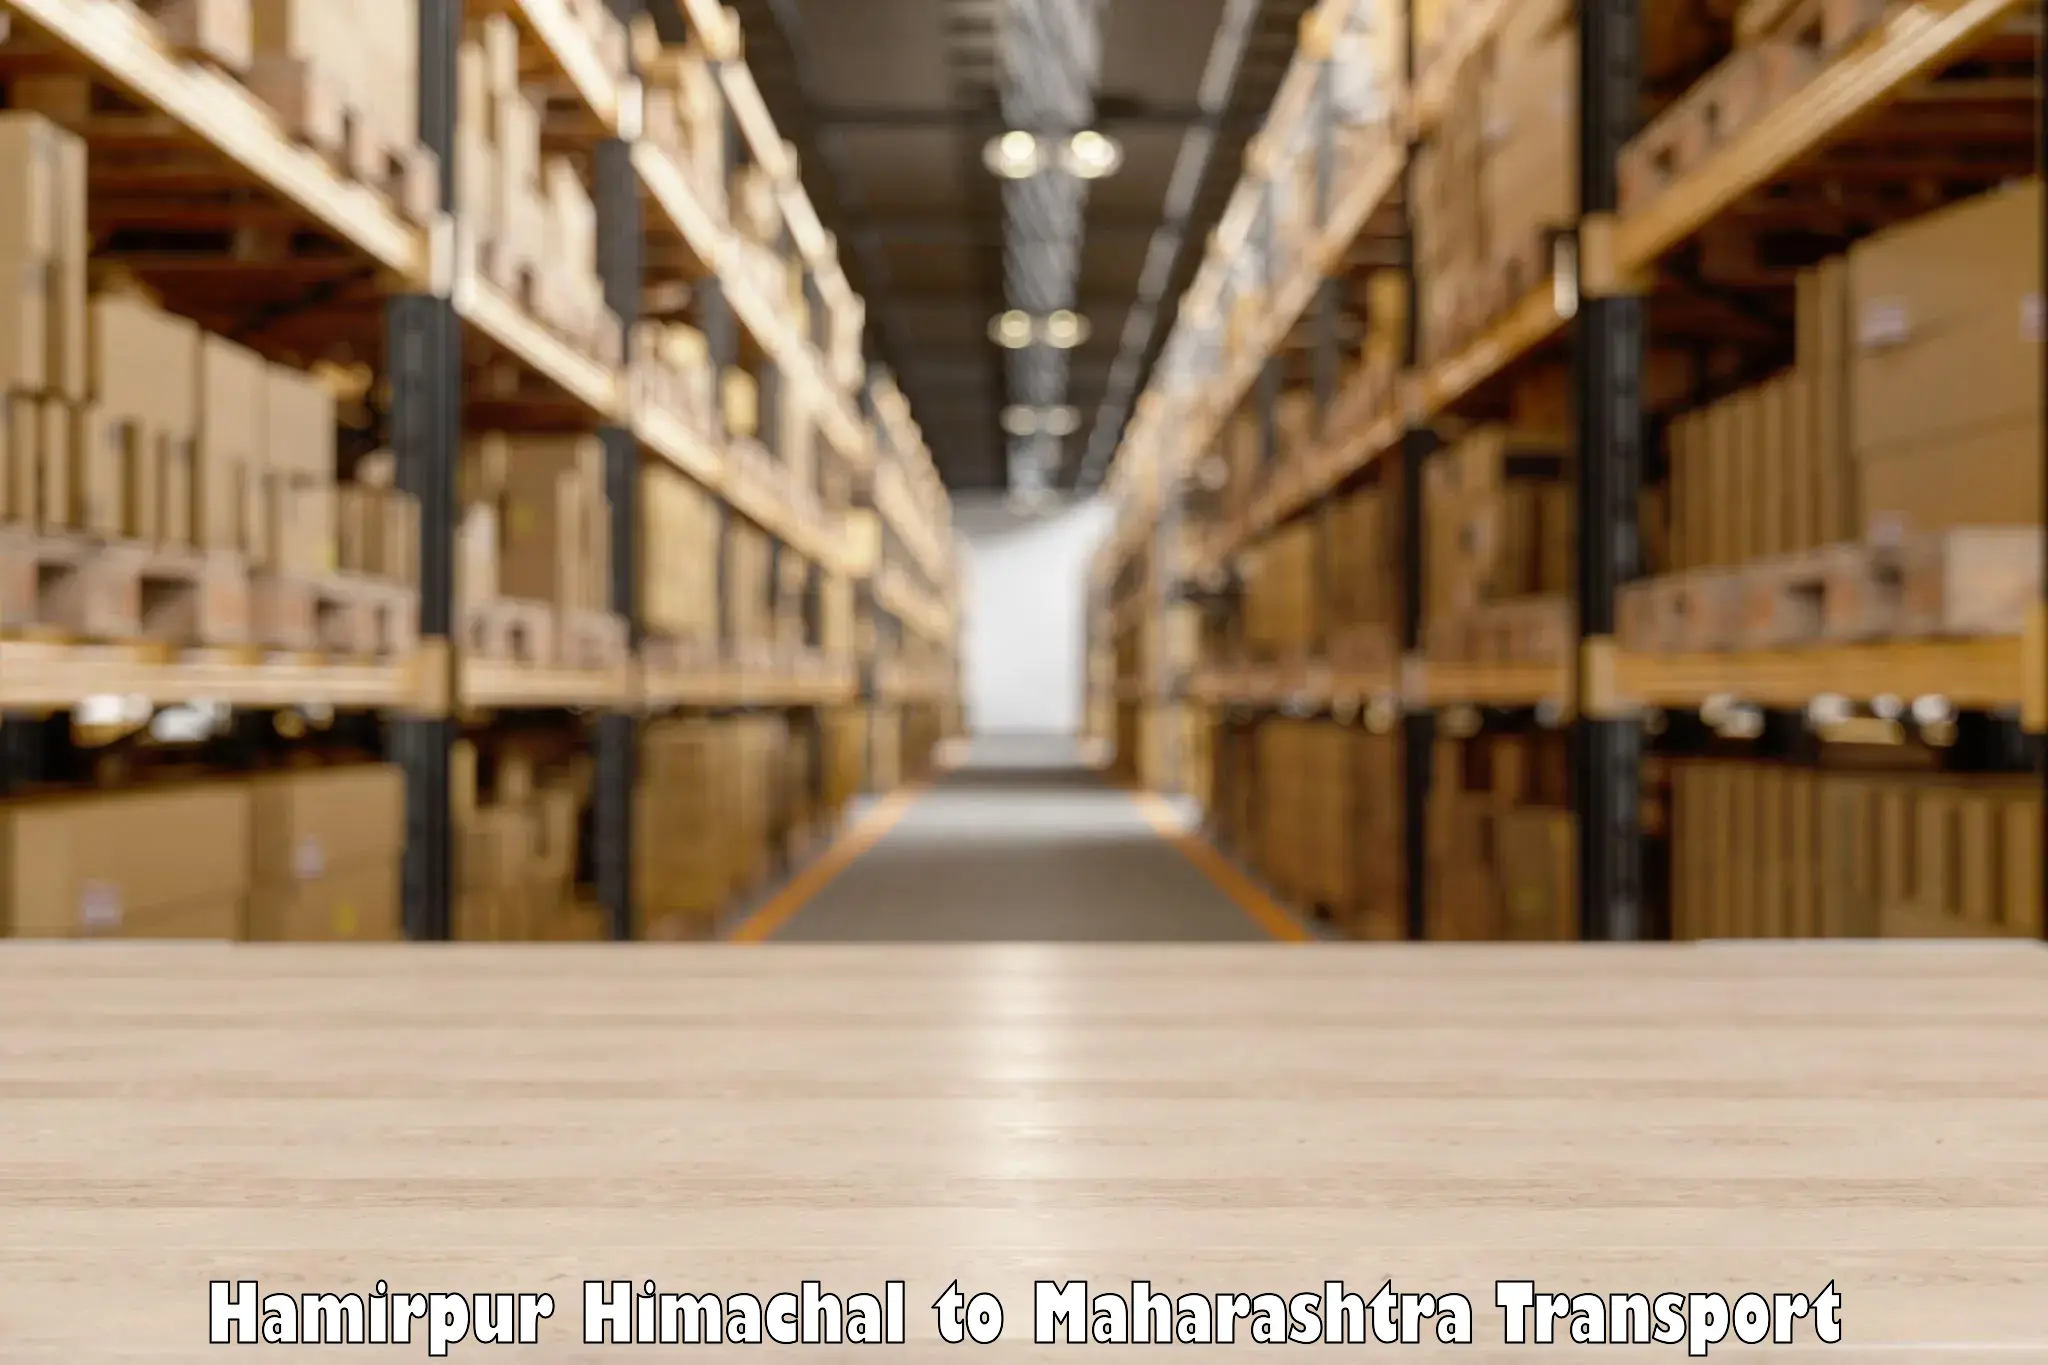 Online transport service Hamirpur Himachal to Wadki